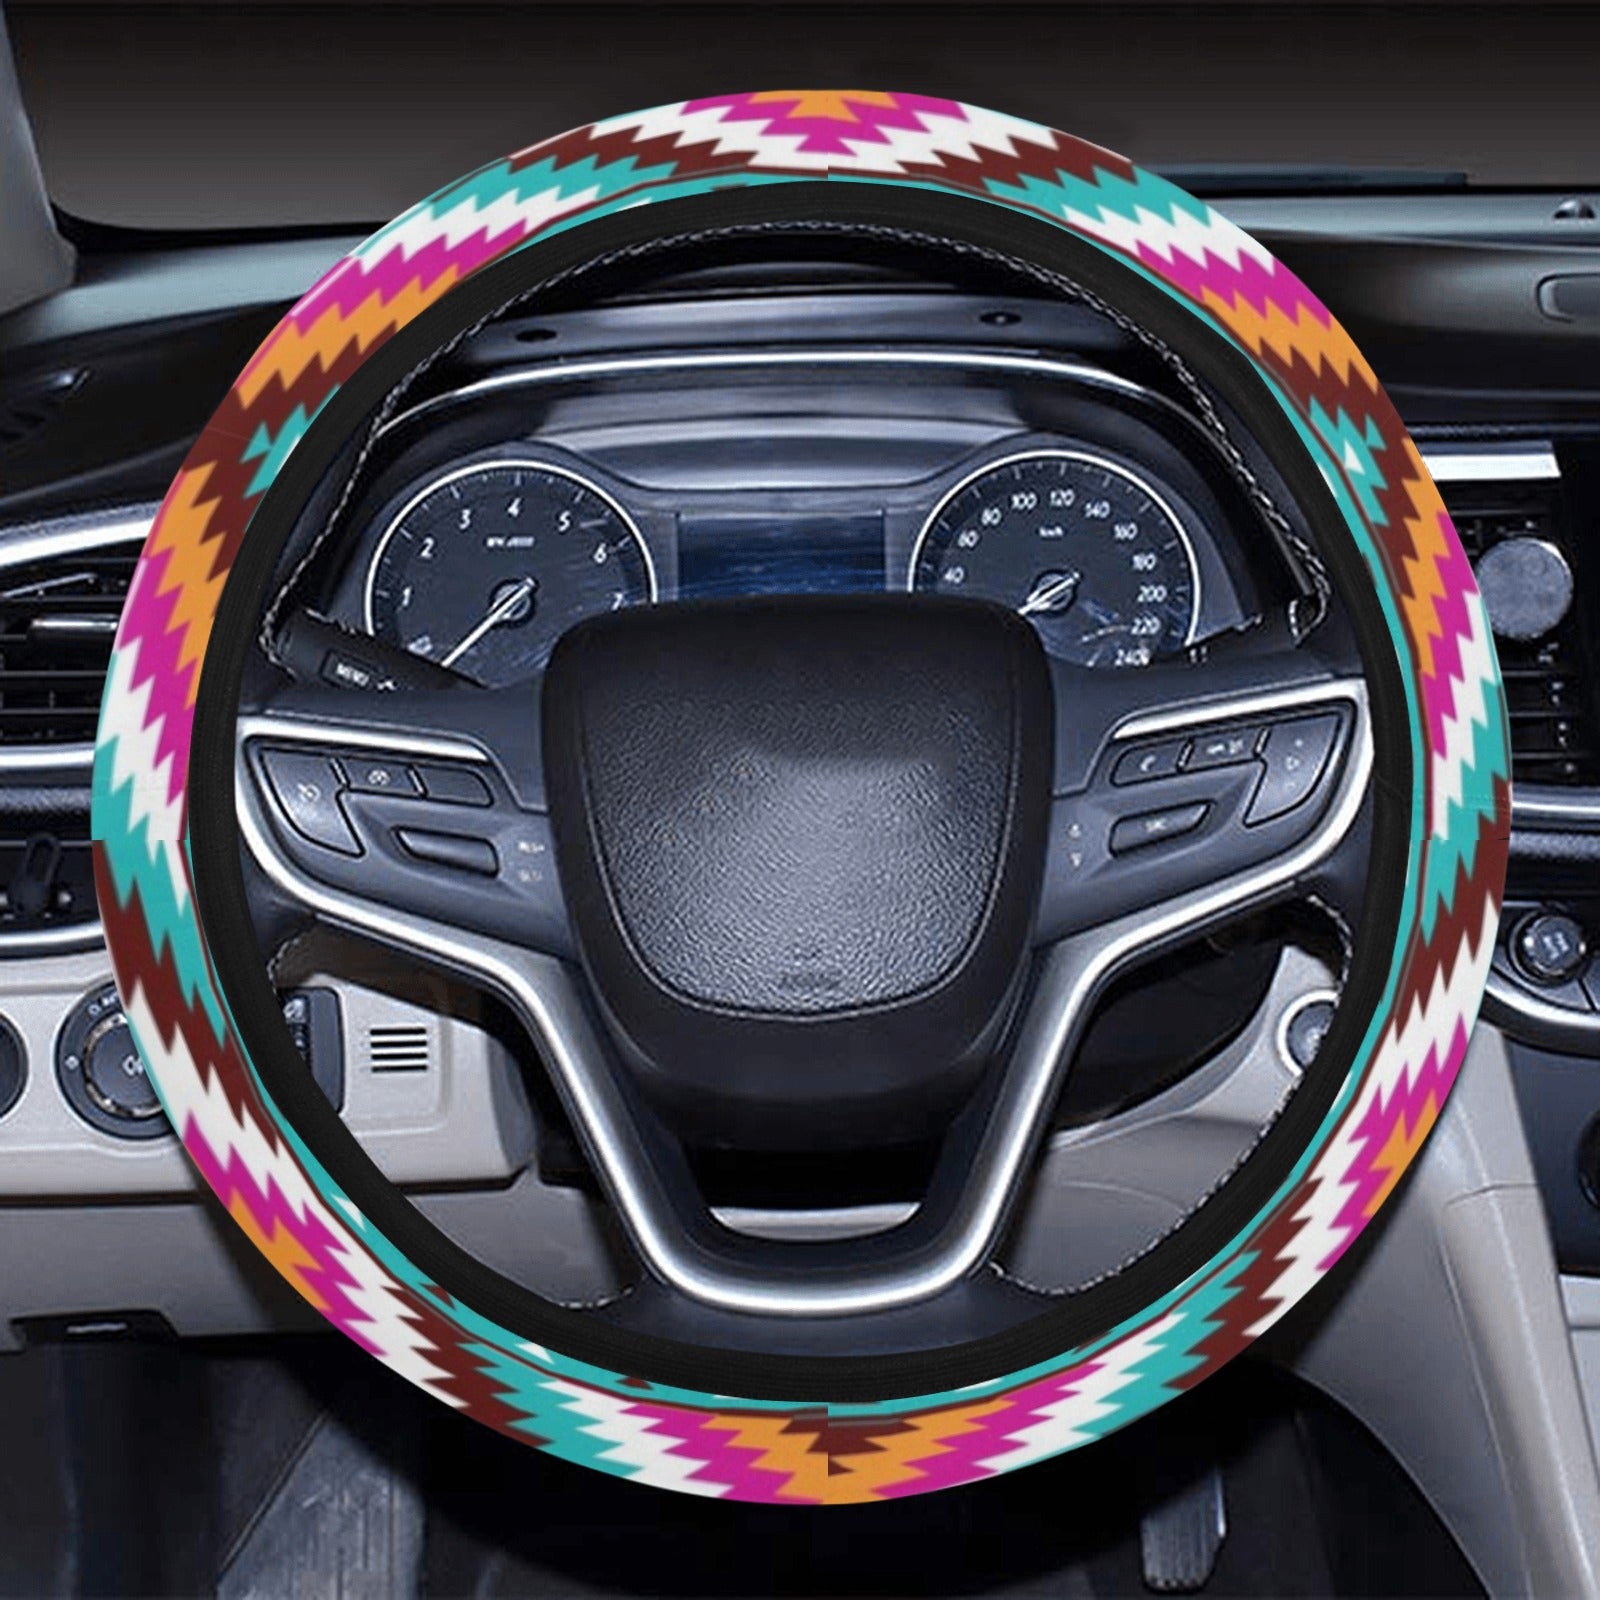 Tribal Ethnic Steering Wheel Cover